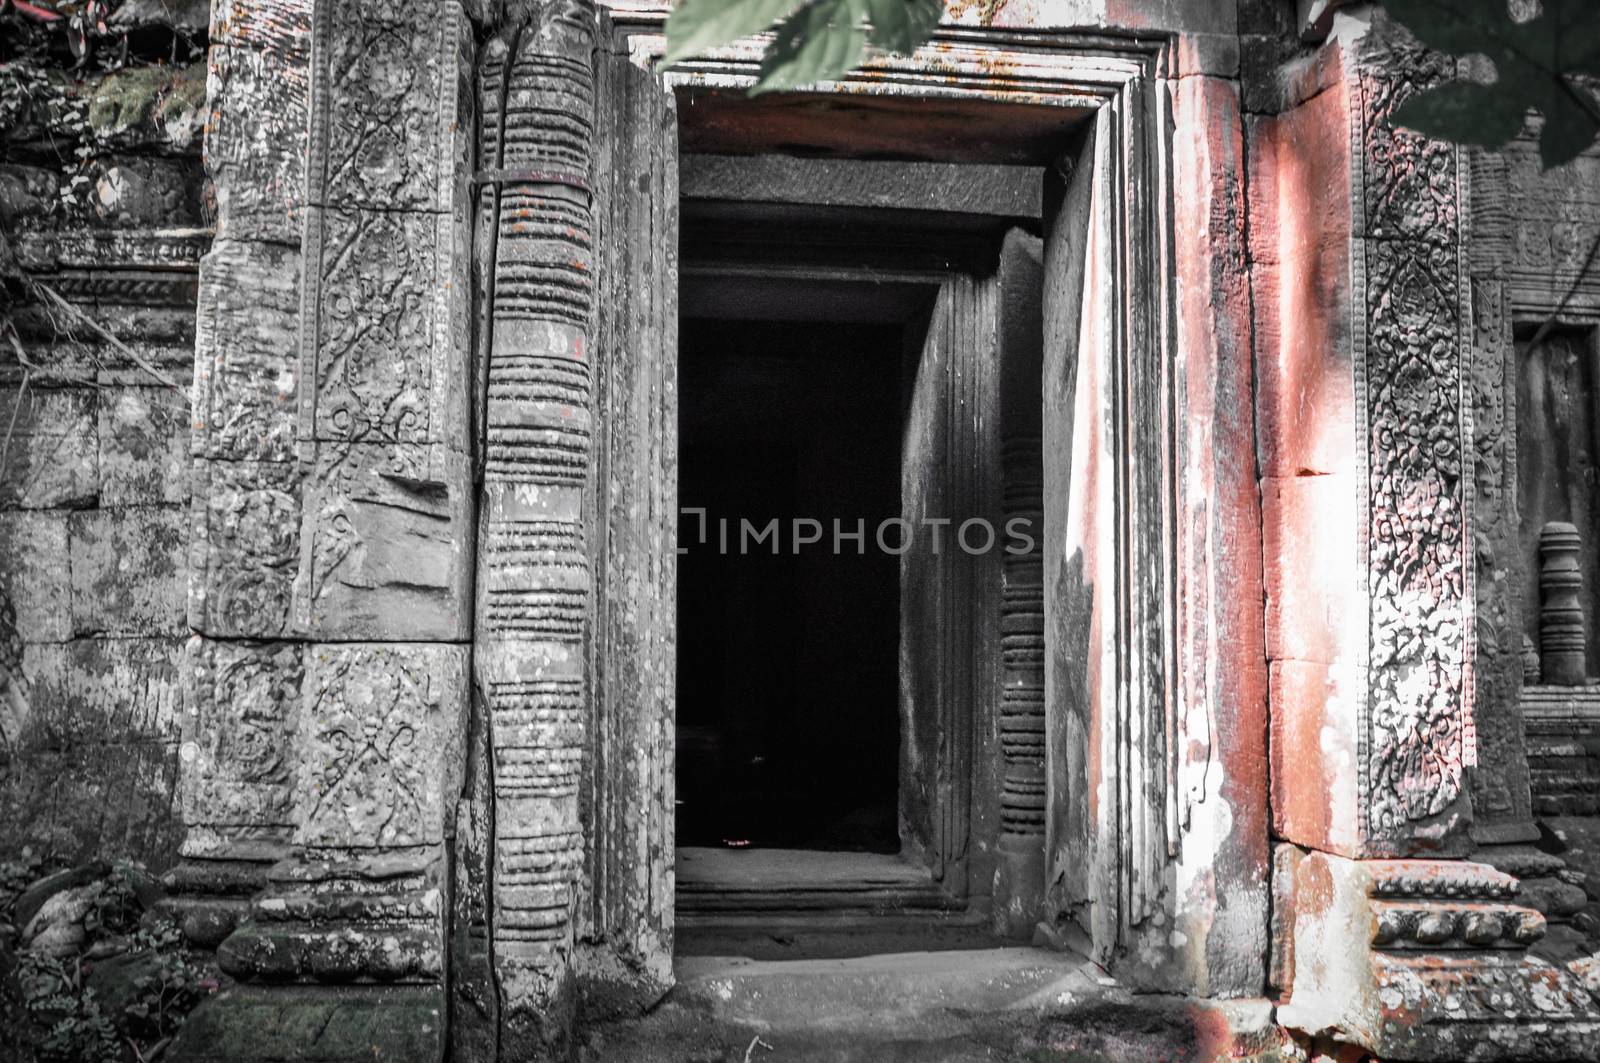 Ancient buddhist khmer temple in Angkor Wat complex, Siem Reap C by weltreisendertj